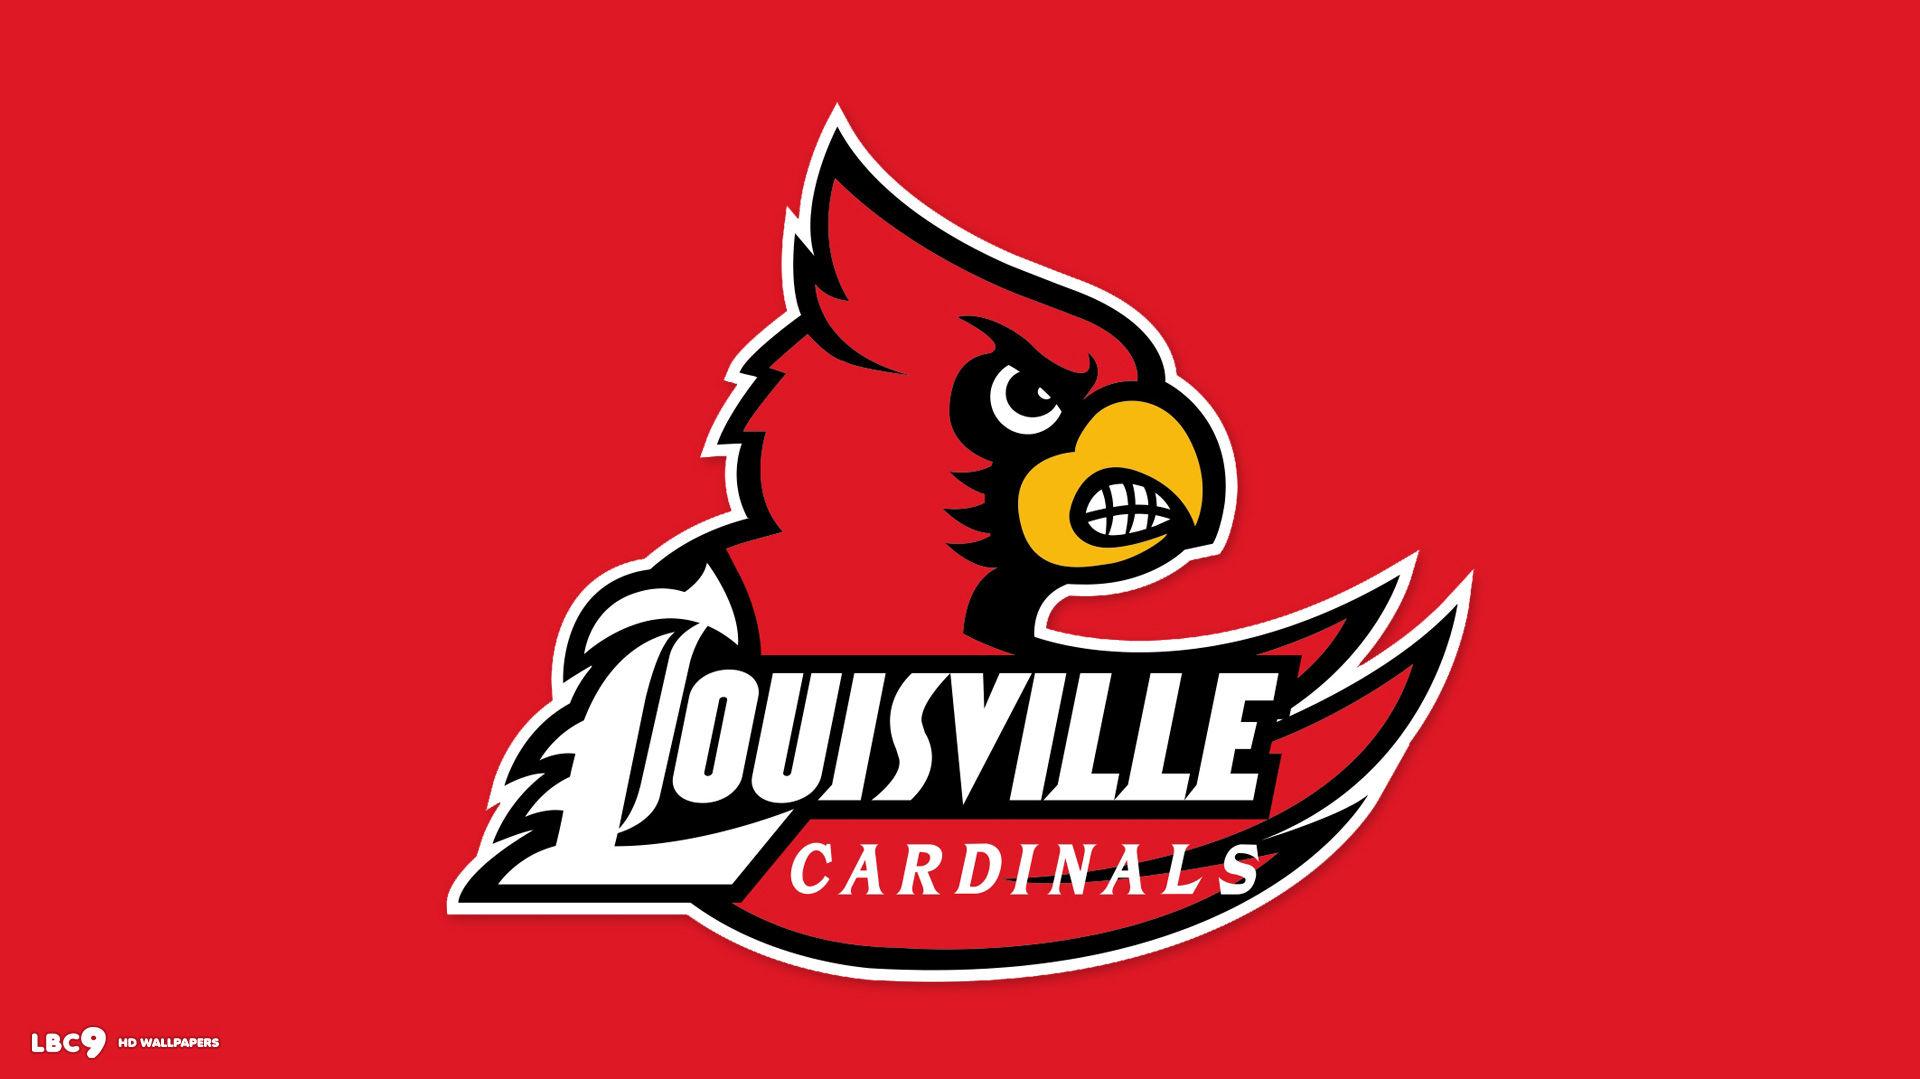 Louisville Cardinals College Athletics Background Flg Lacrosse